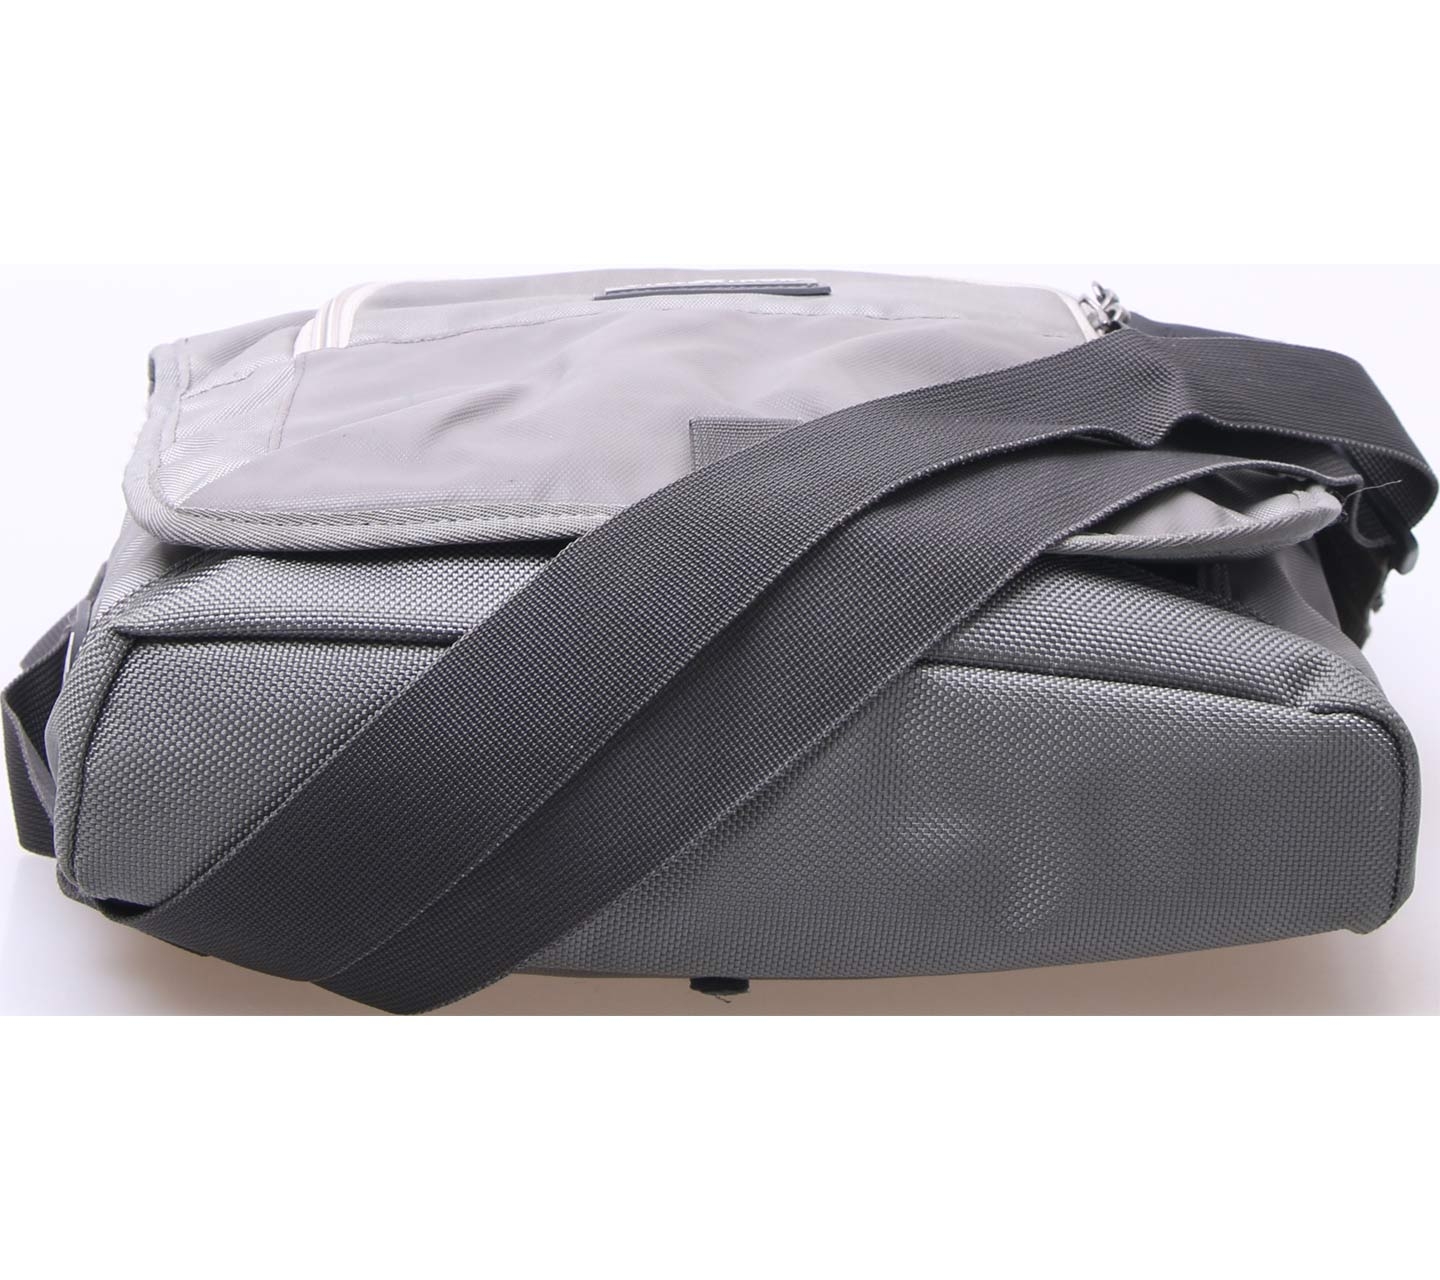 Victorinox Dark Grey Sling Bag